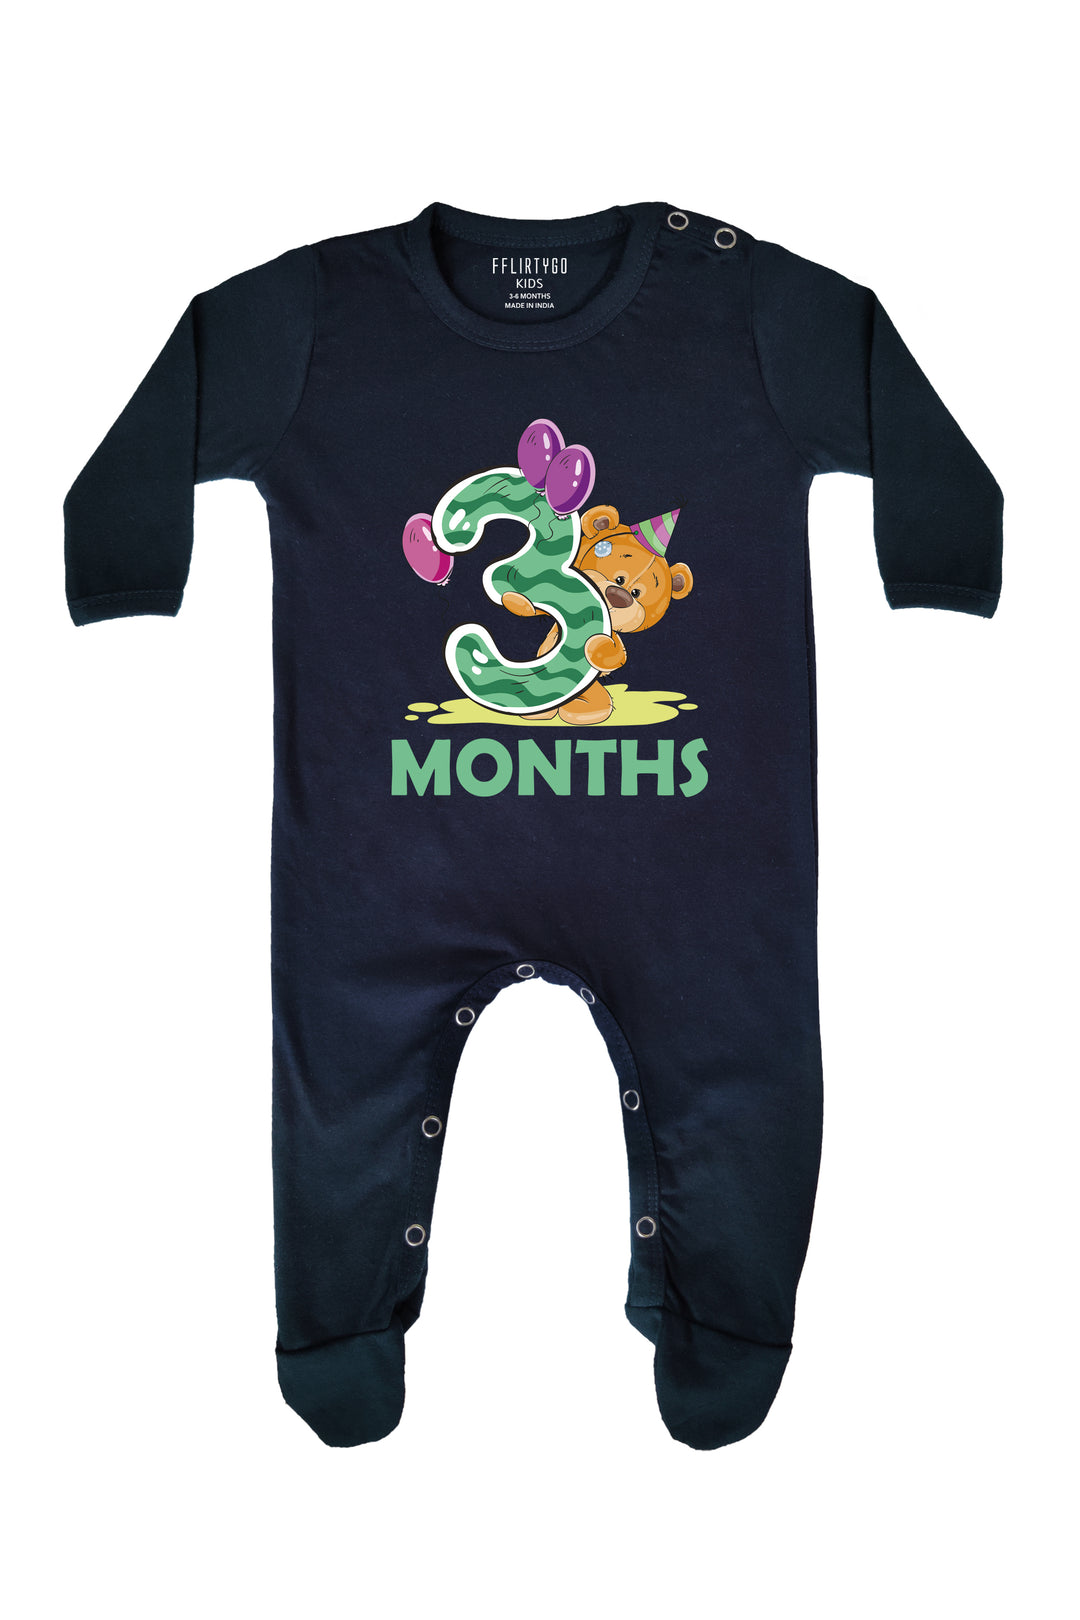 Three Months Milestone - Teddy Baby Romper | Onesies